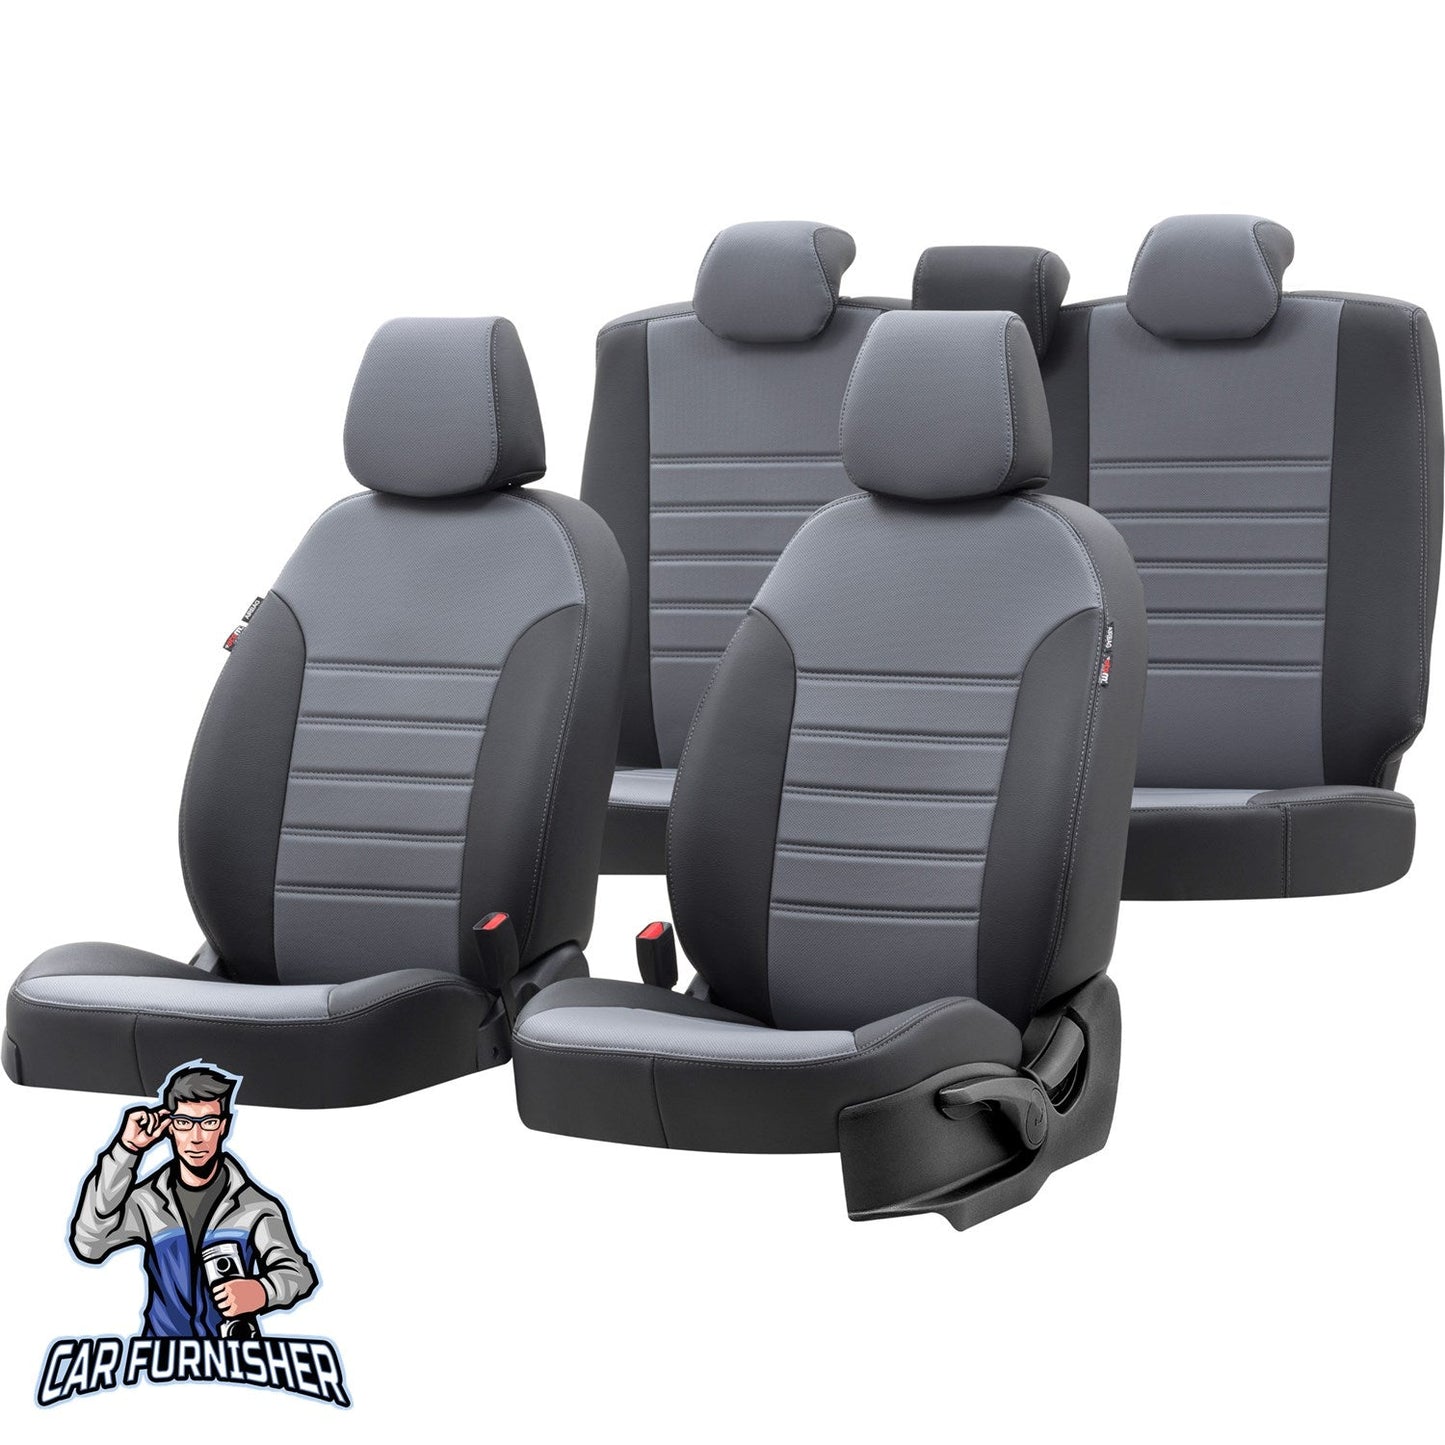 Tata Xenon Seat Covers Istanbul Leather Design Smoked Black Leather